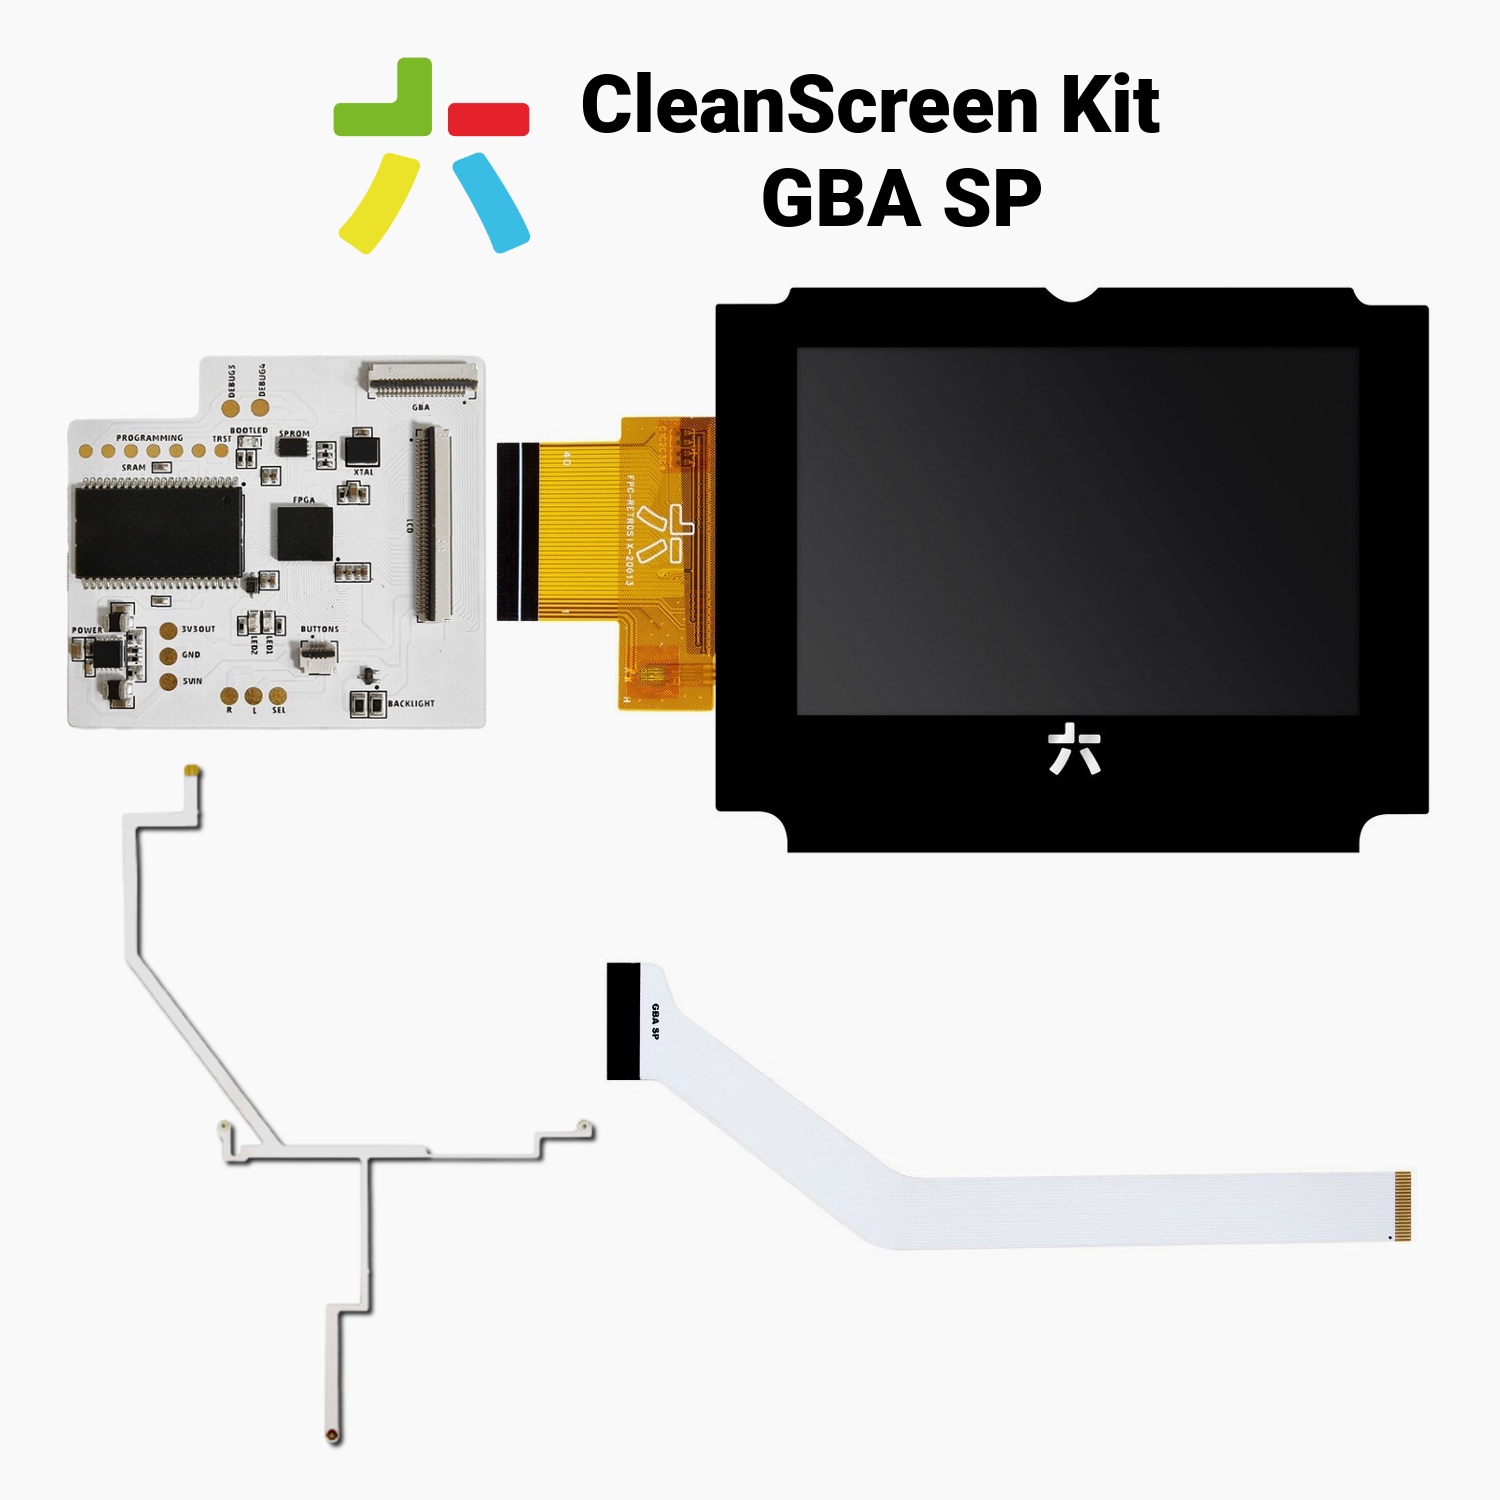 gba-sp-cleanscreen-kit-retrosix